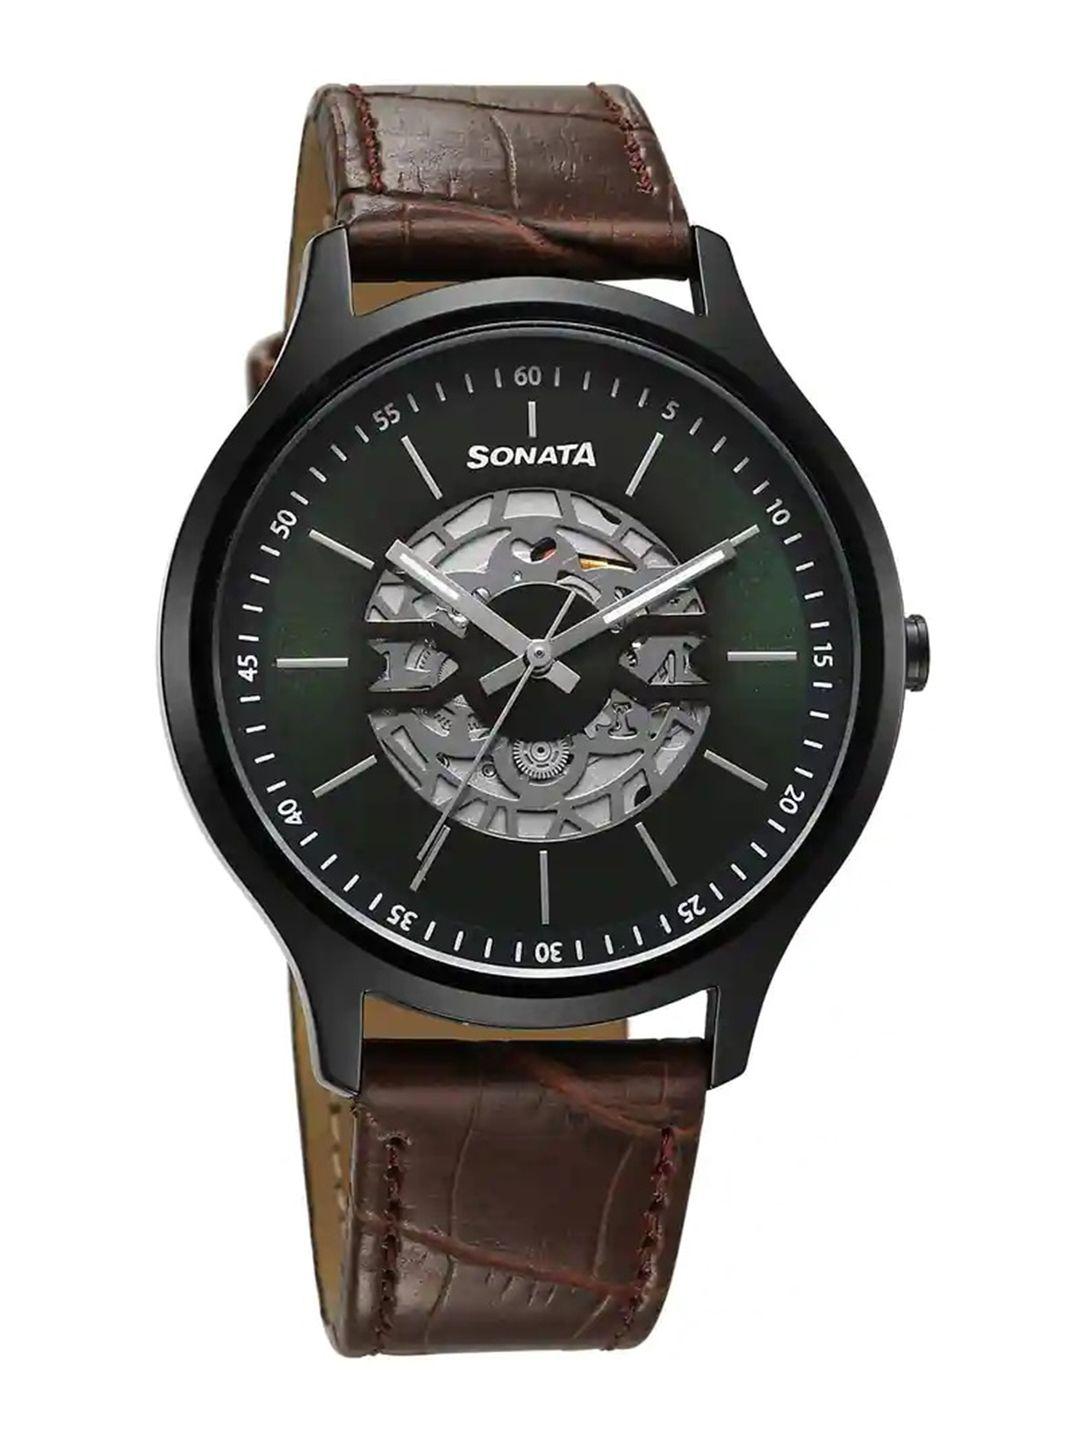 sonata unveil 2.0 men brass dial & leather textured straps analogue watch 7140nl06